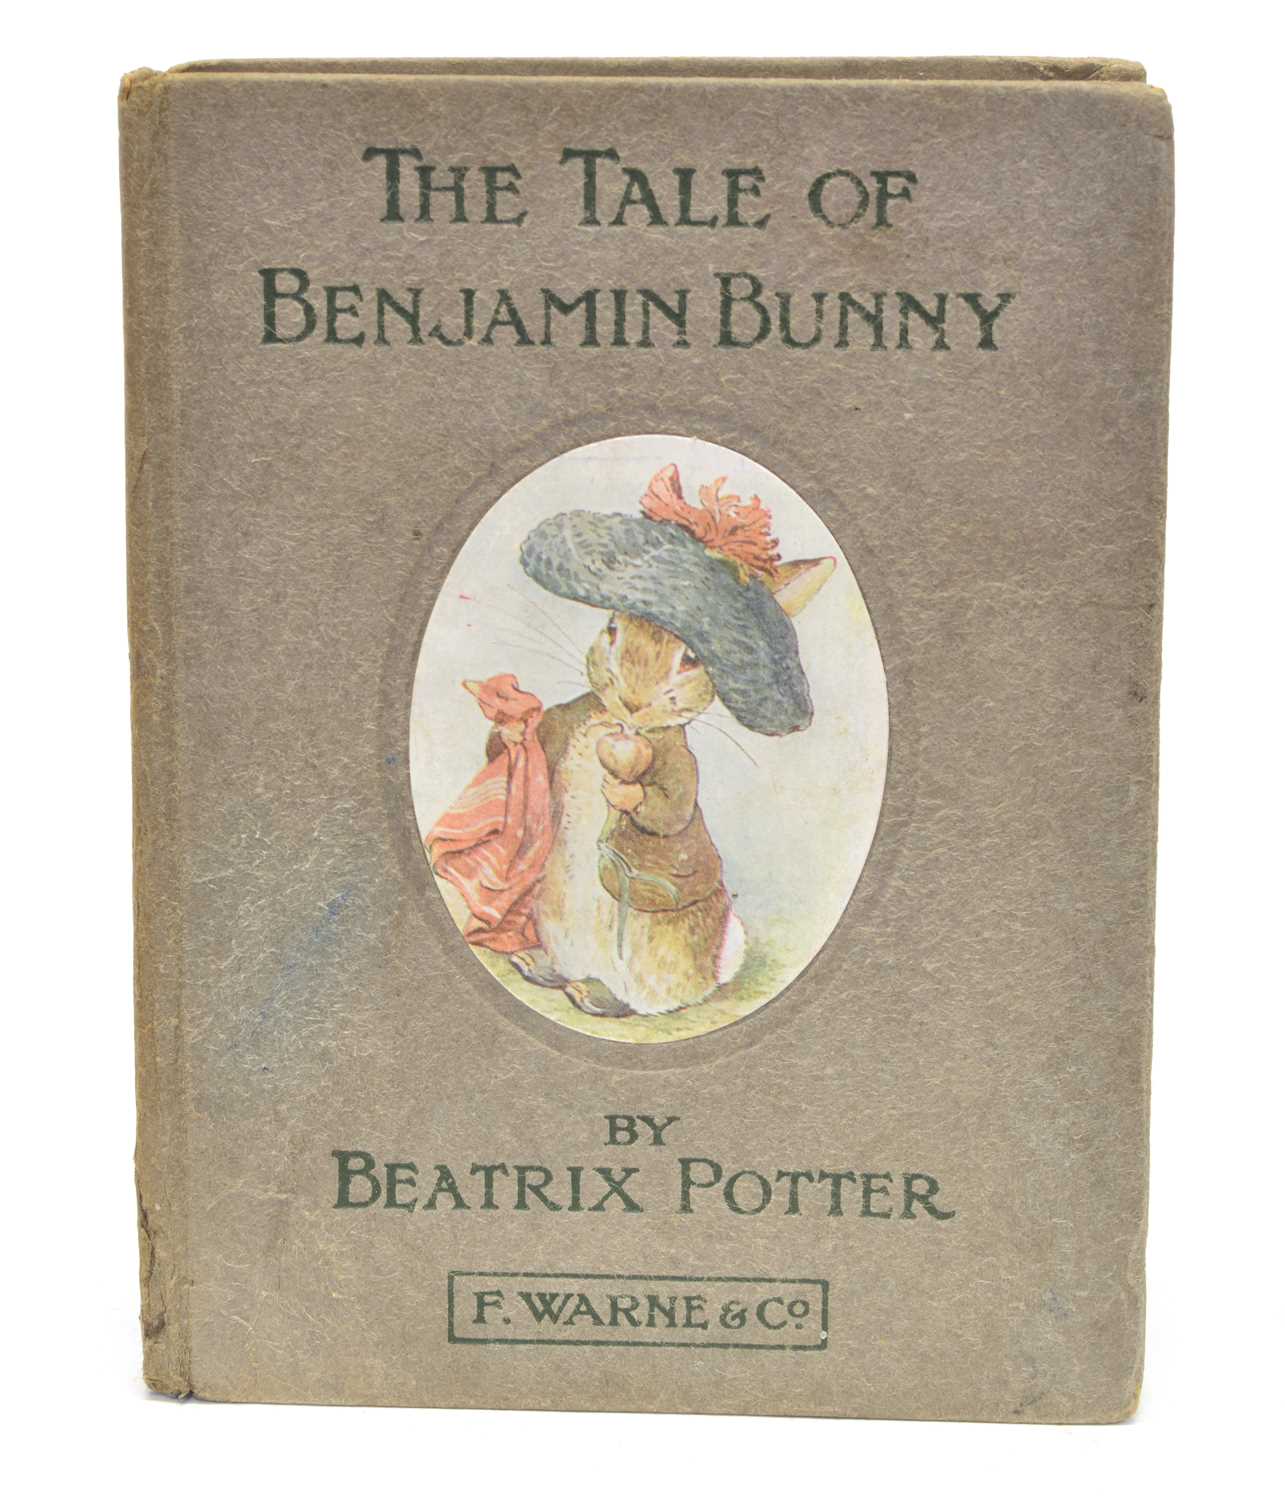 Lot 3 - The Tale of Benjamin Bunny